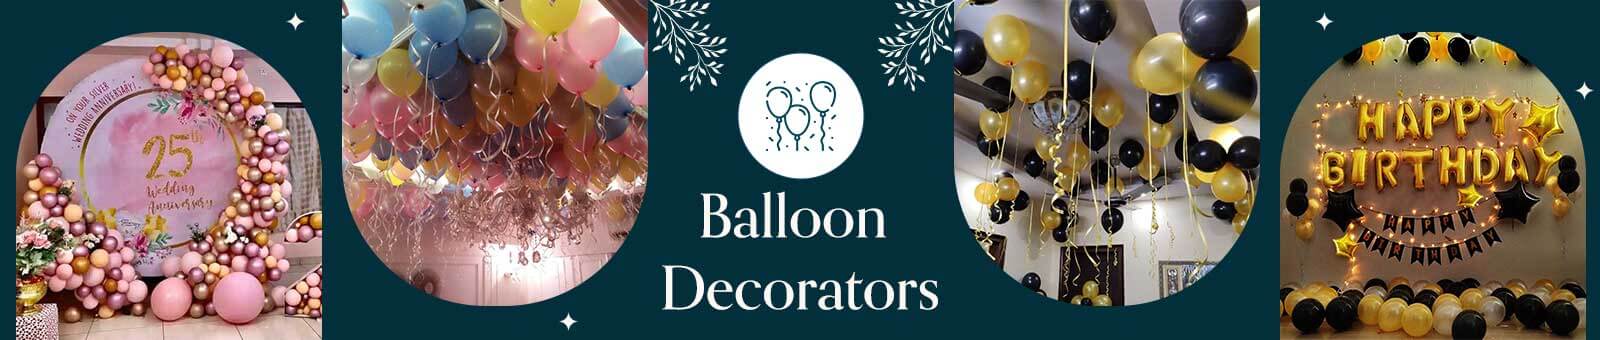 Balloon Decorators